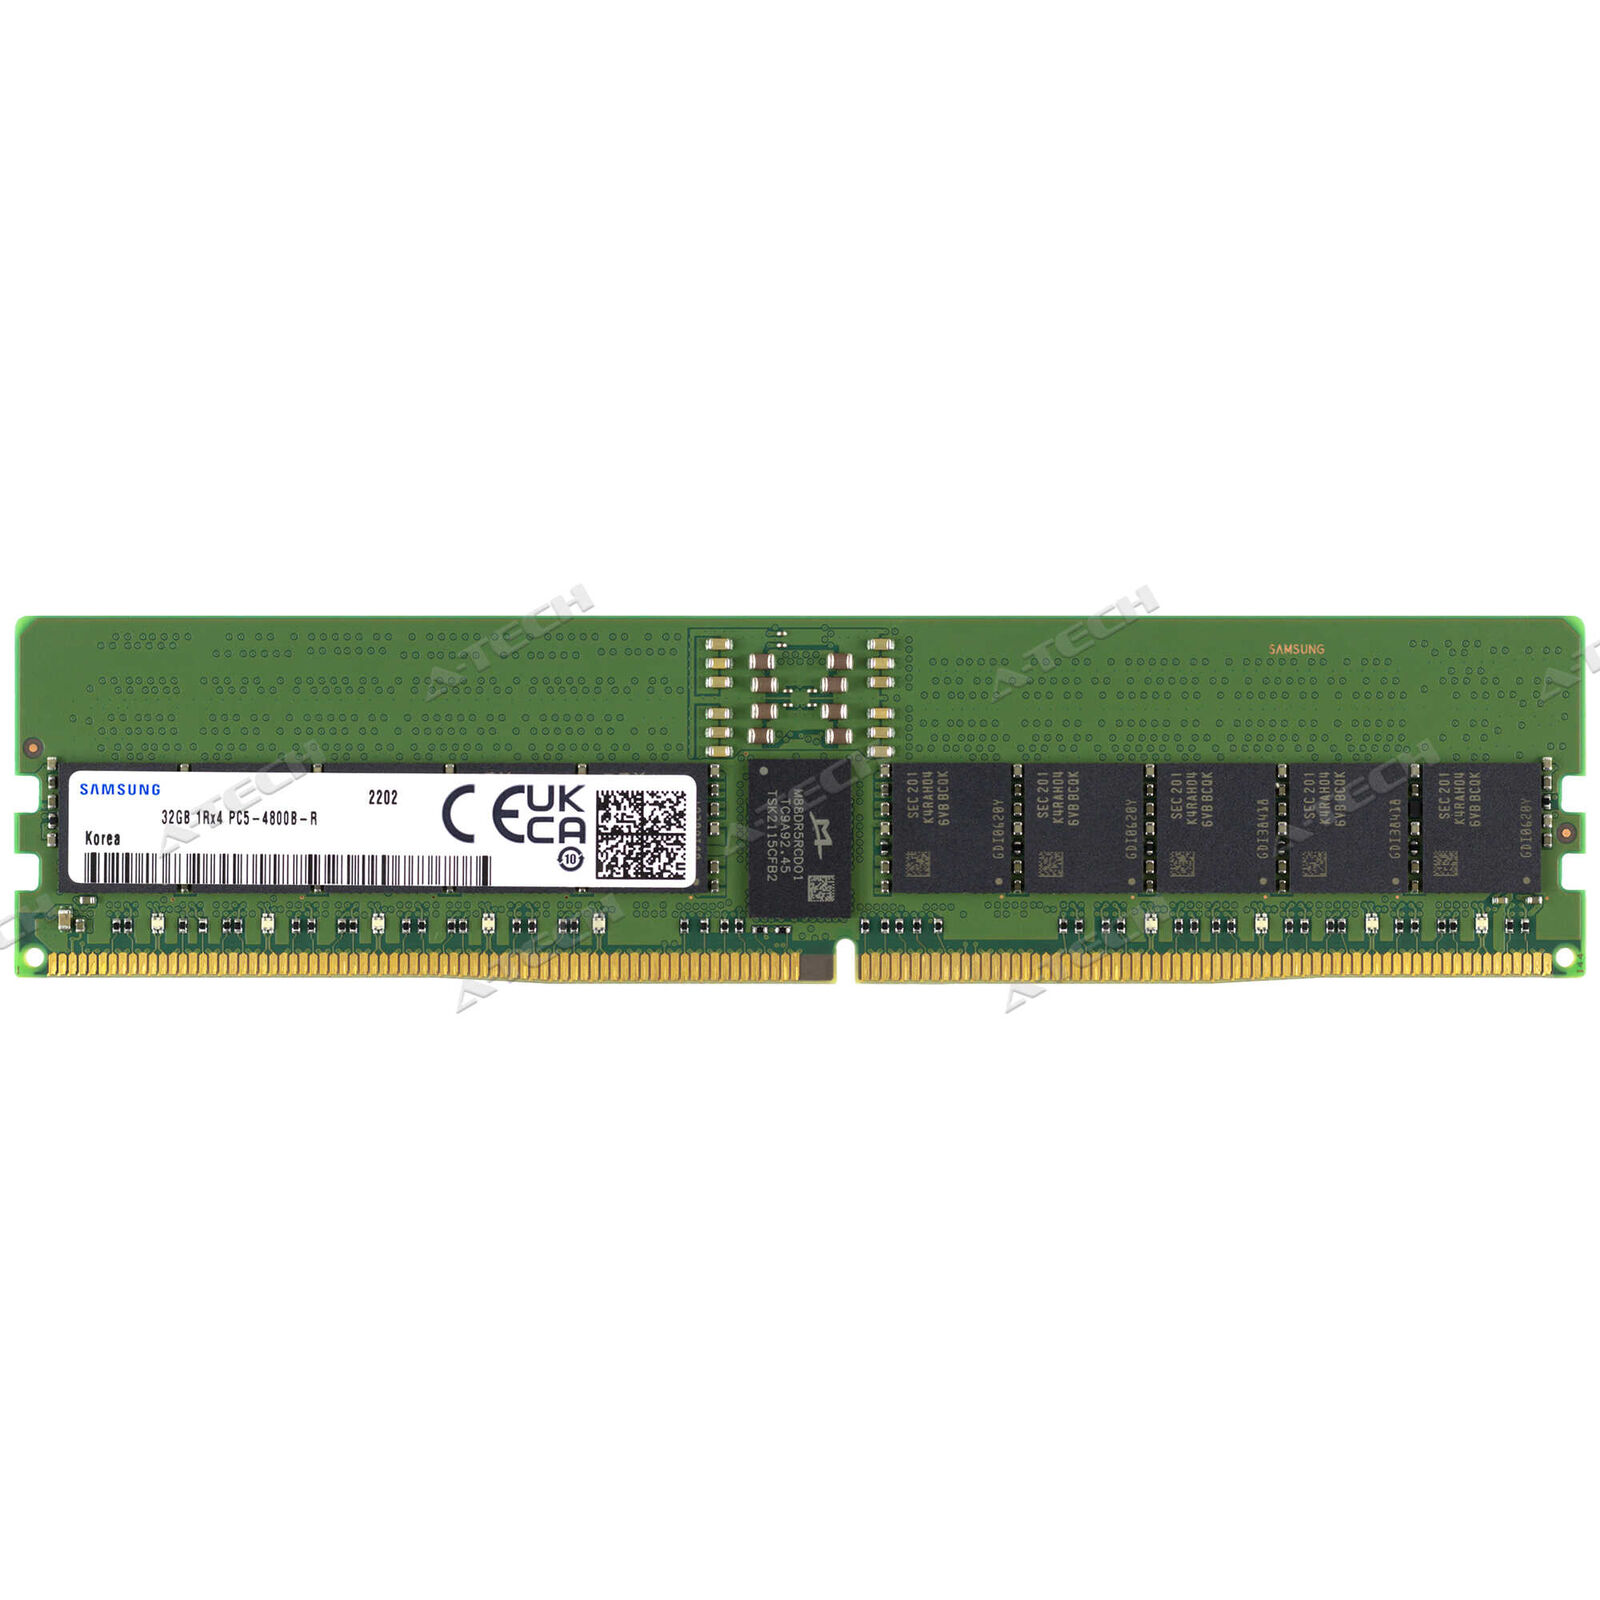 Samsung 32GB 1Rx4 PC5-4800 EC4 RDIMM DDR5-38400 ECC Registered Server Memory RAM